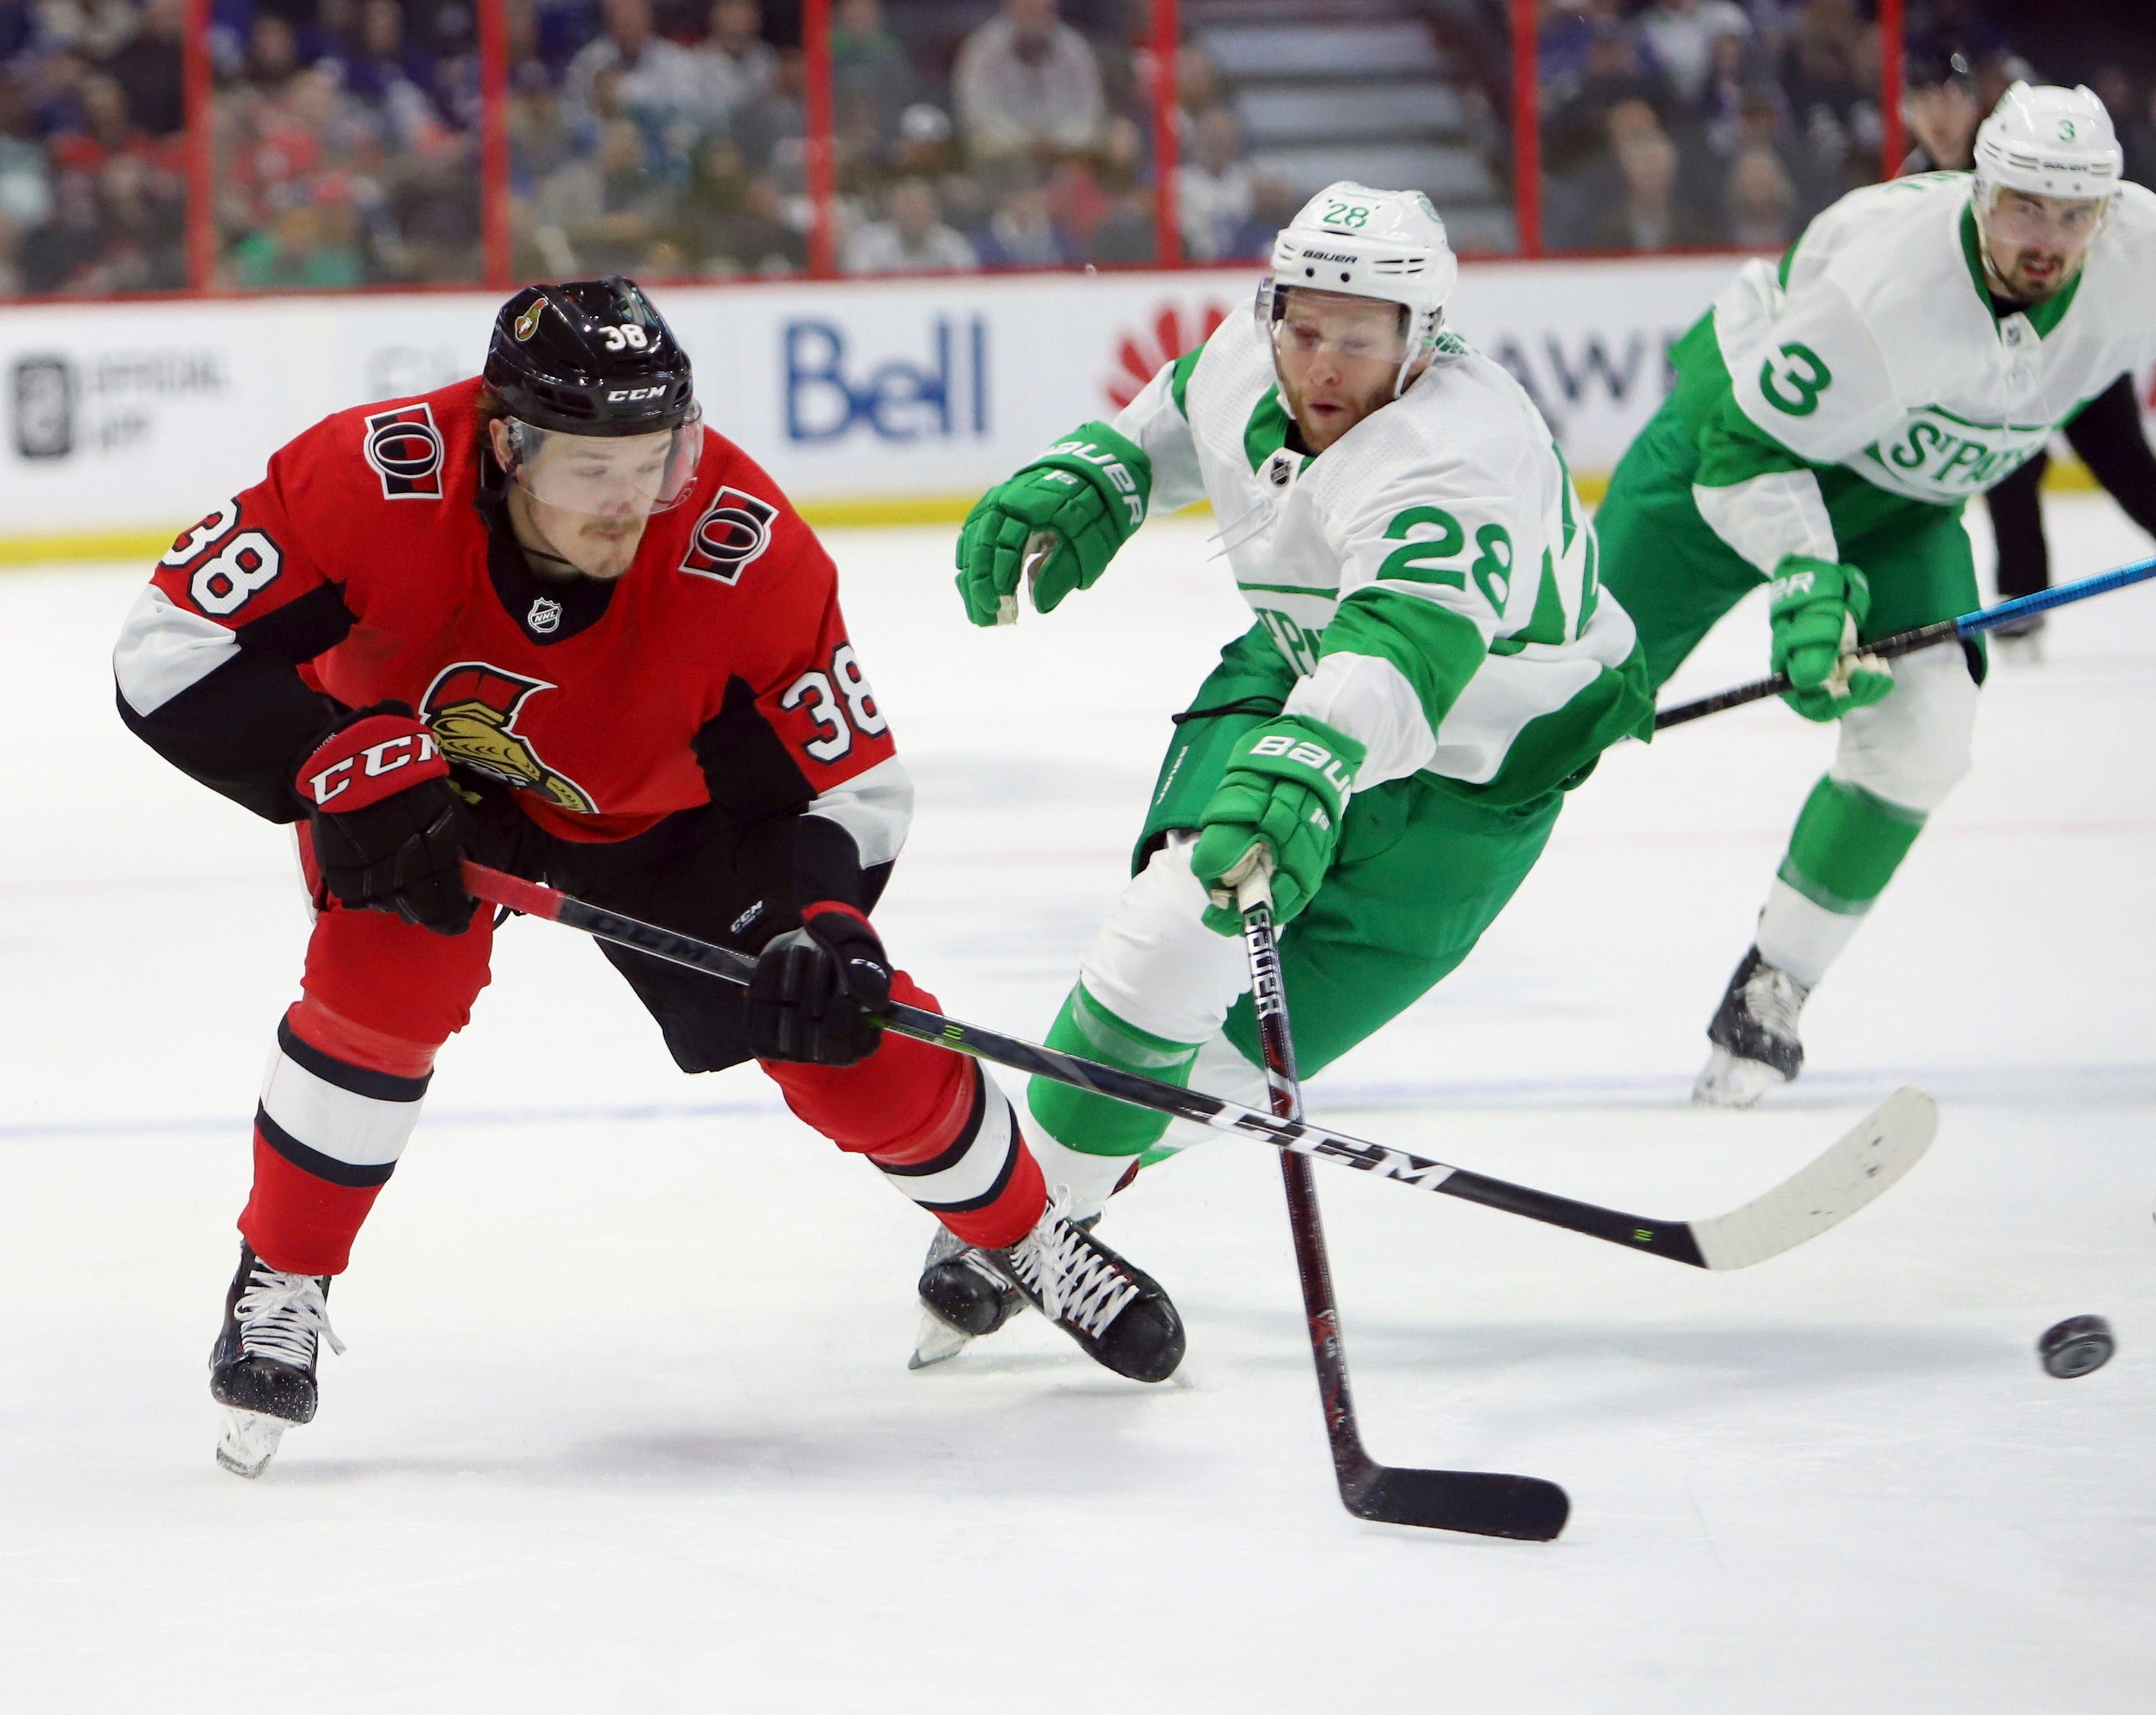 Paajarvi leads Senators to 6-2 win over slumping Maple Leafs